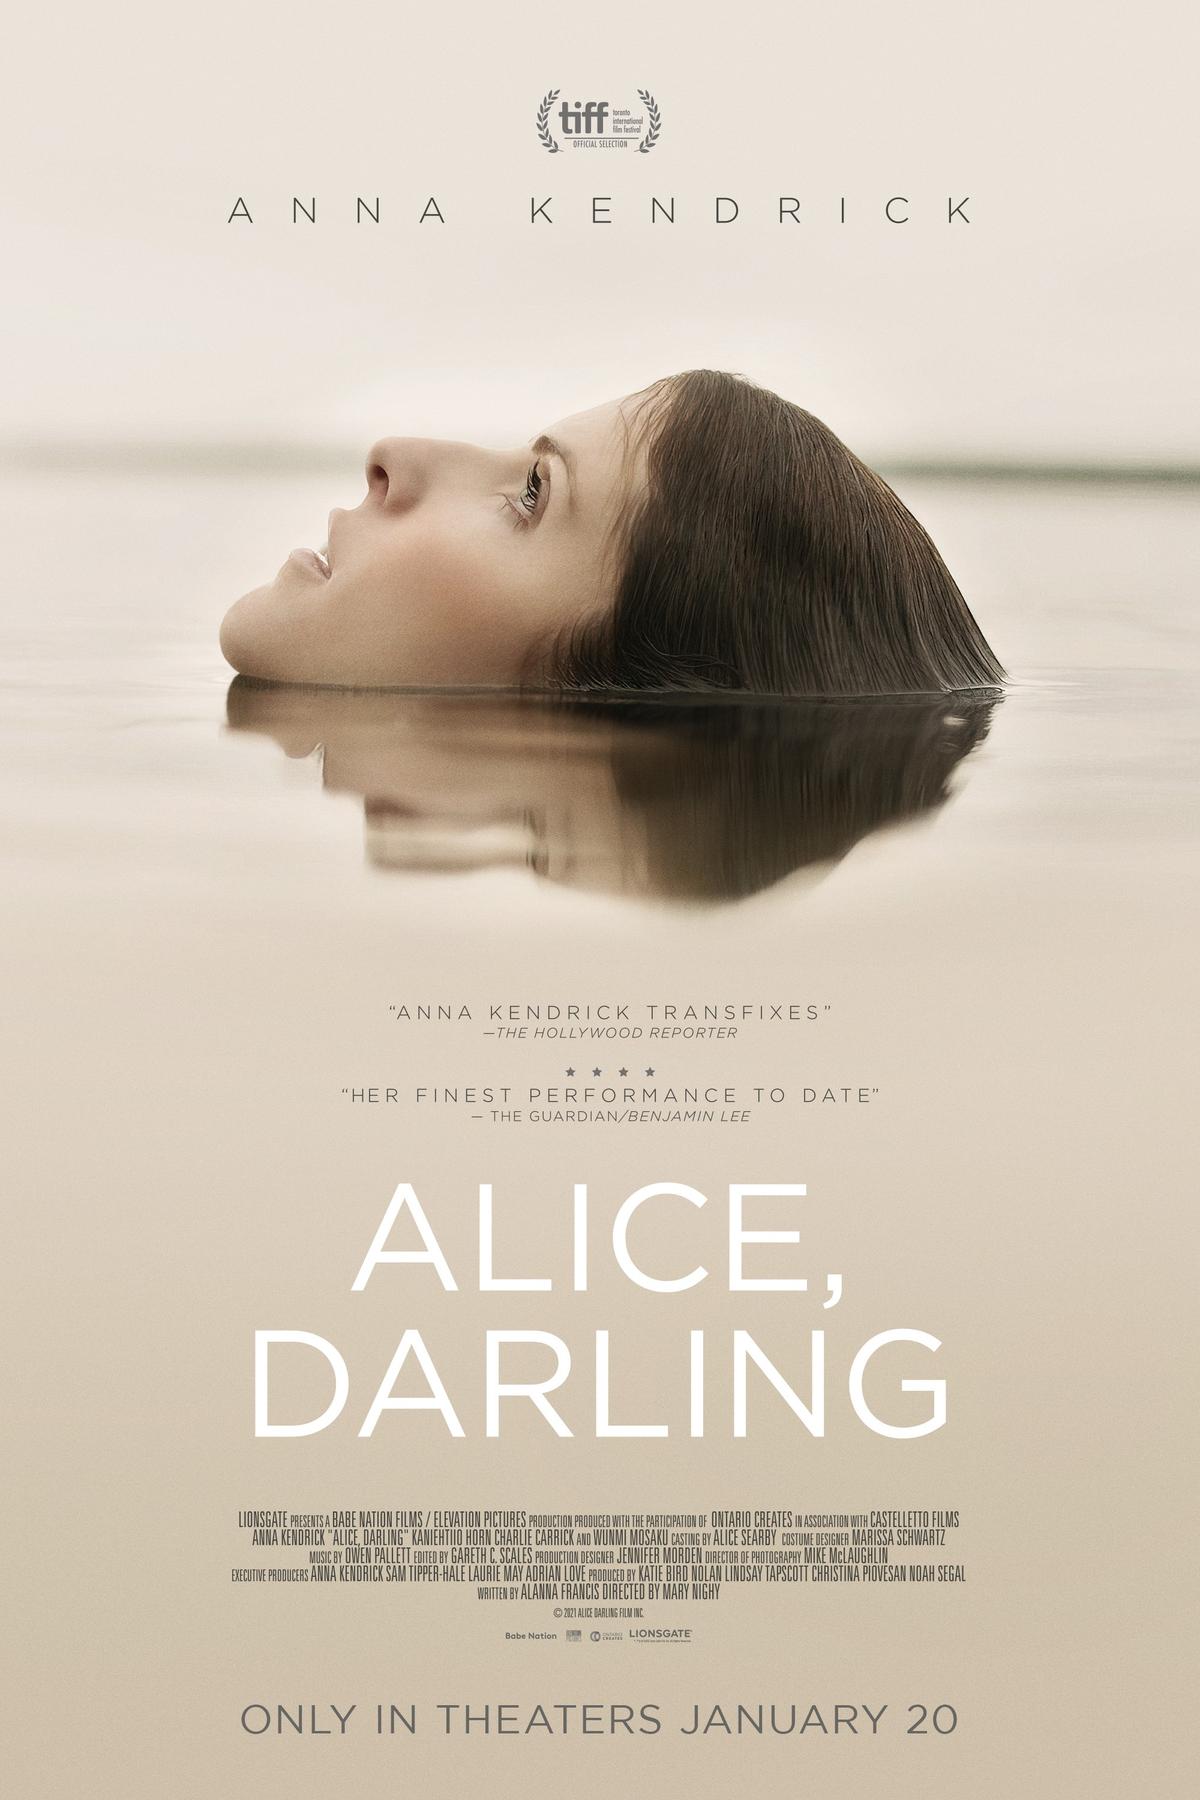 Movie poster for "Alice, Darling"